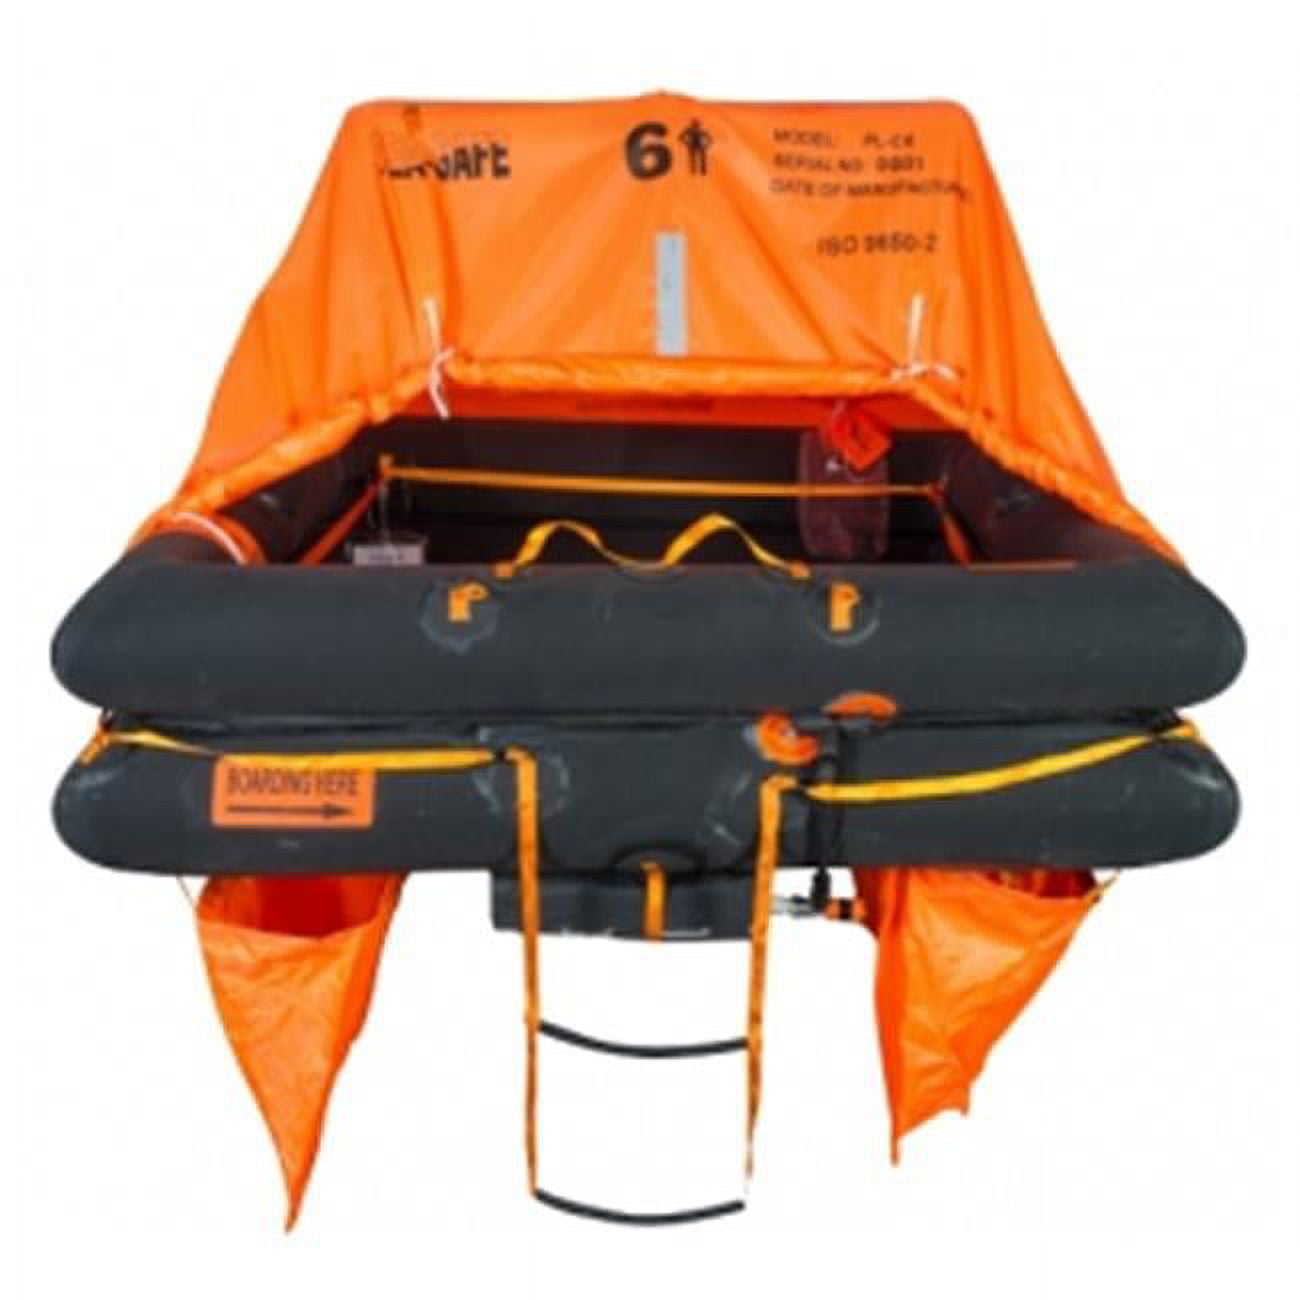 DXPLC6VR 6 Person Pro-Light Recreational Coastal Liferaft in Valise -  Seasafe